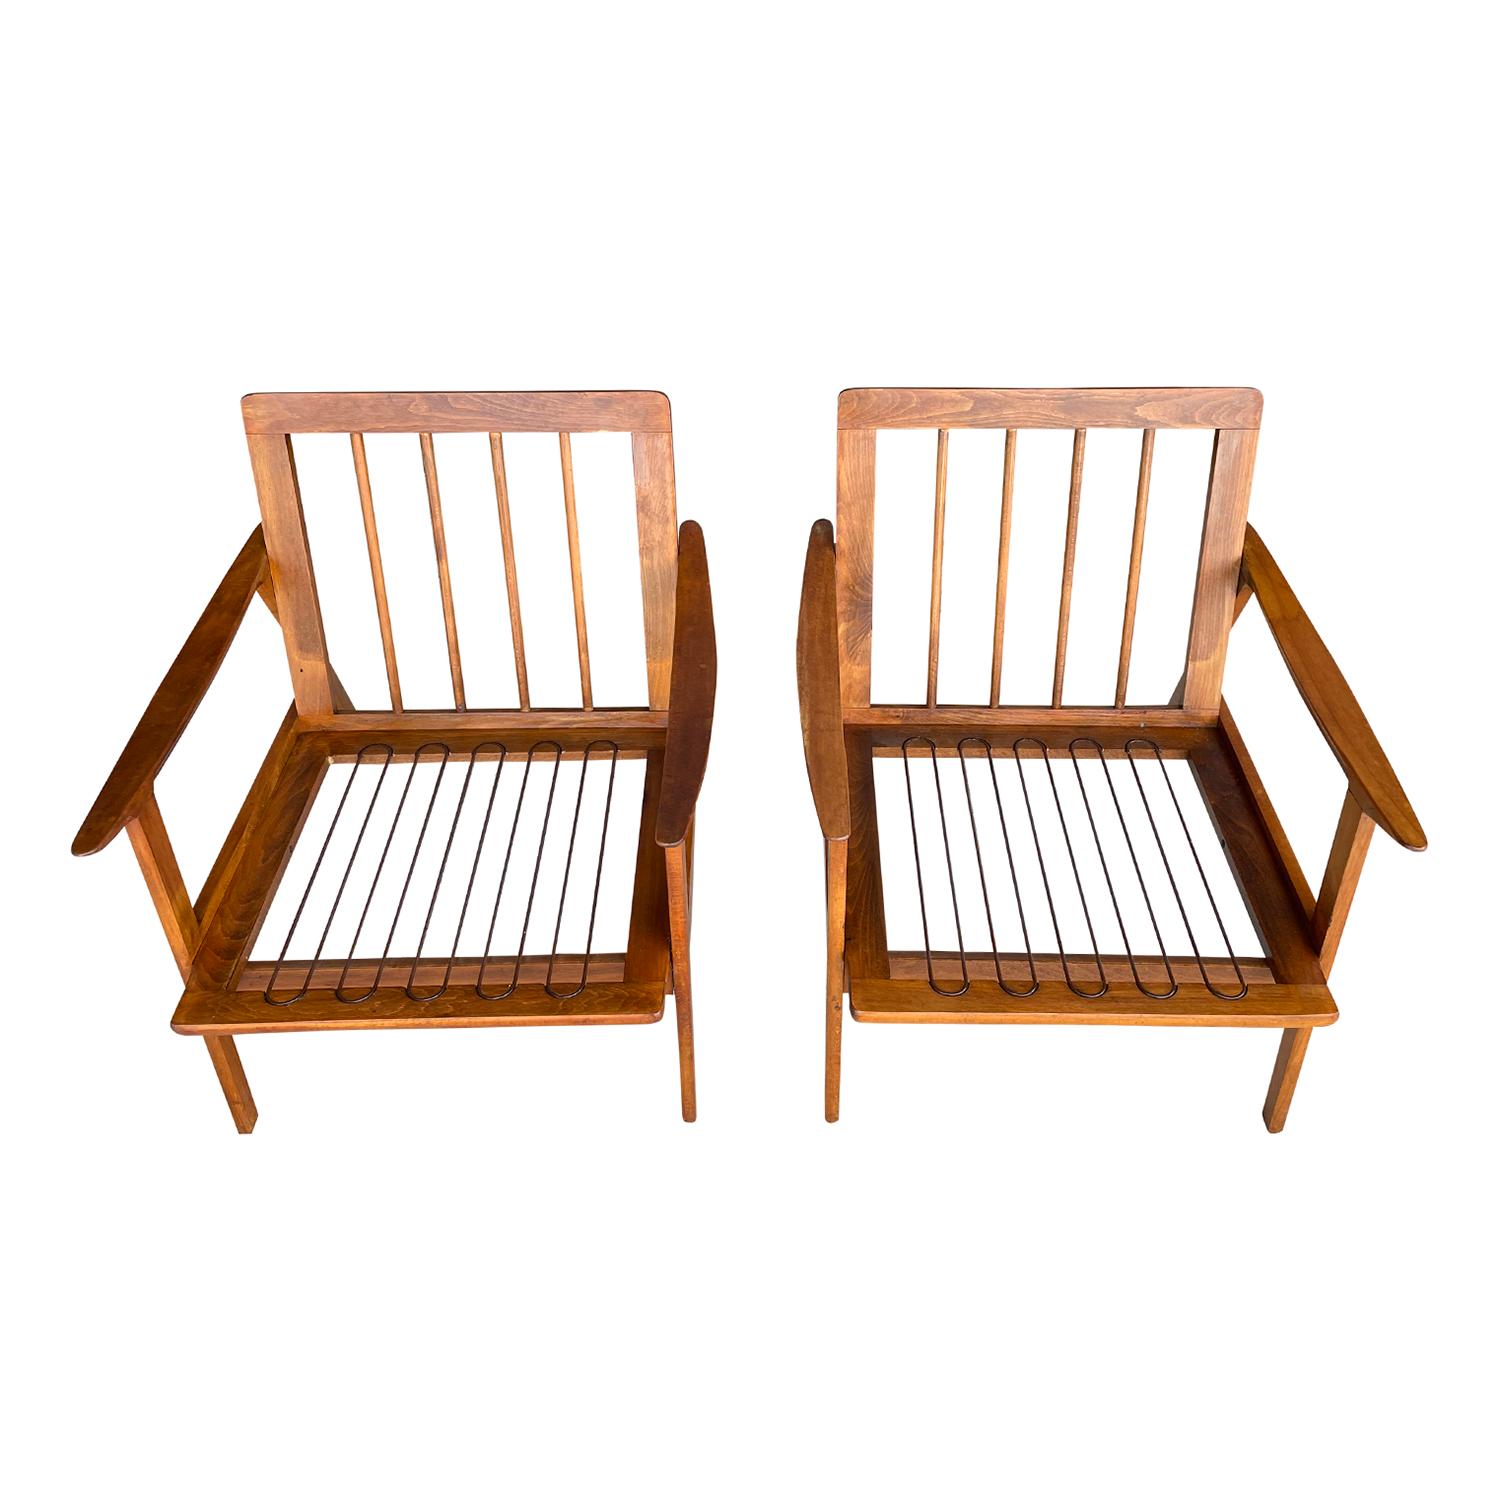 20th Century Danish Vintage Modern Pair of Open Teak Chairs by Kai Kristiansen For Sale 8